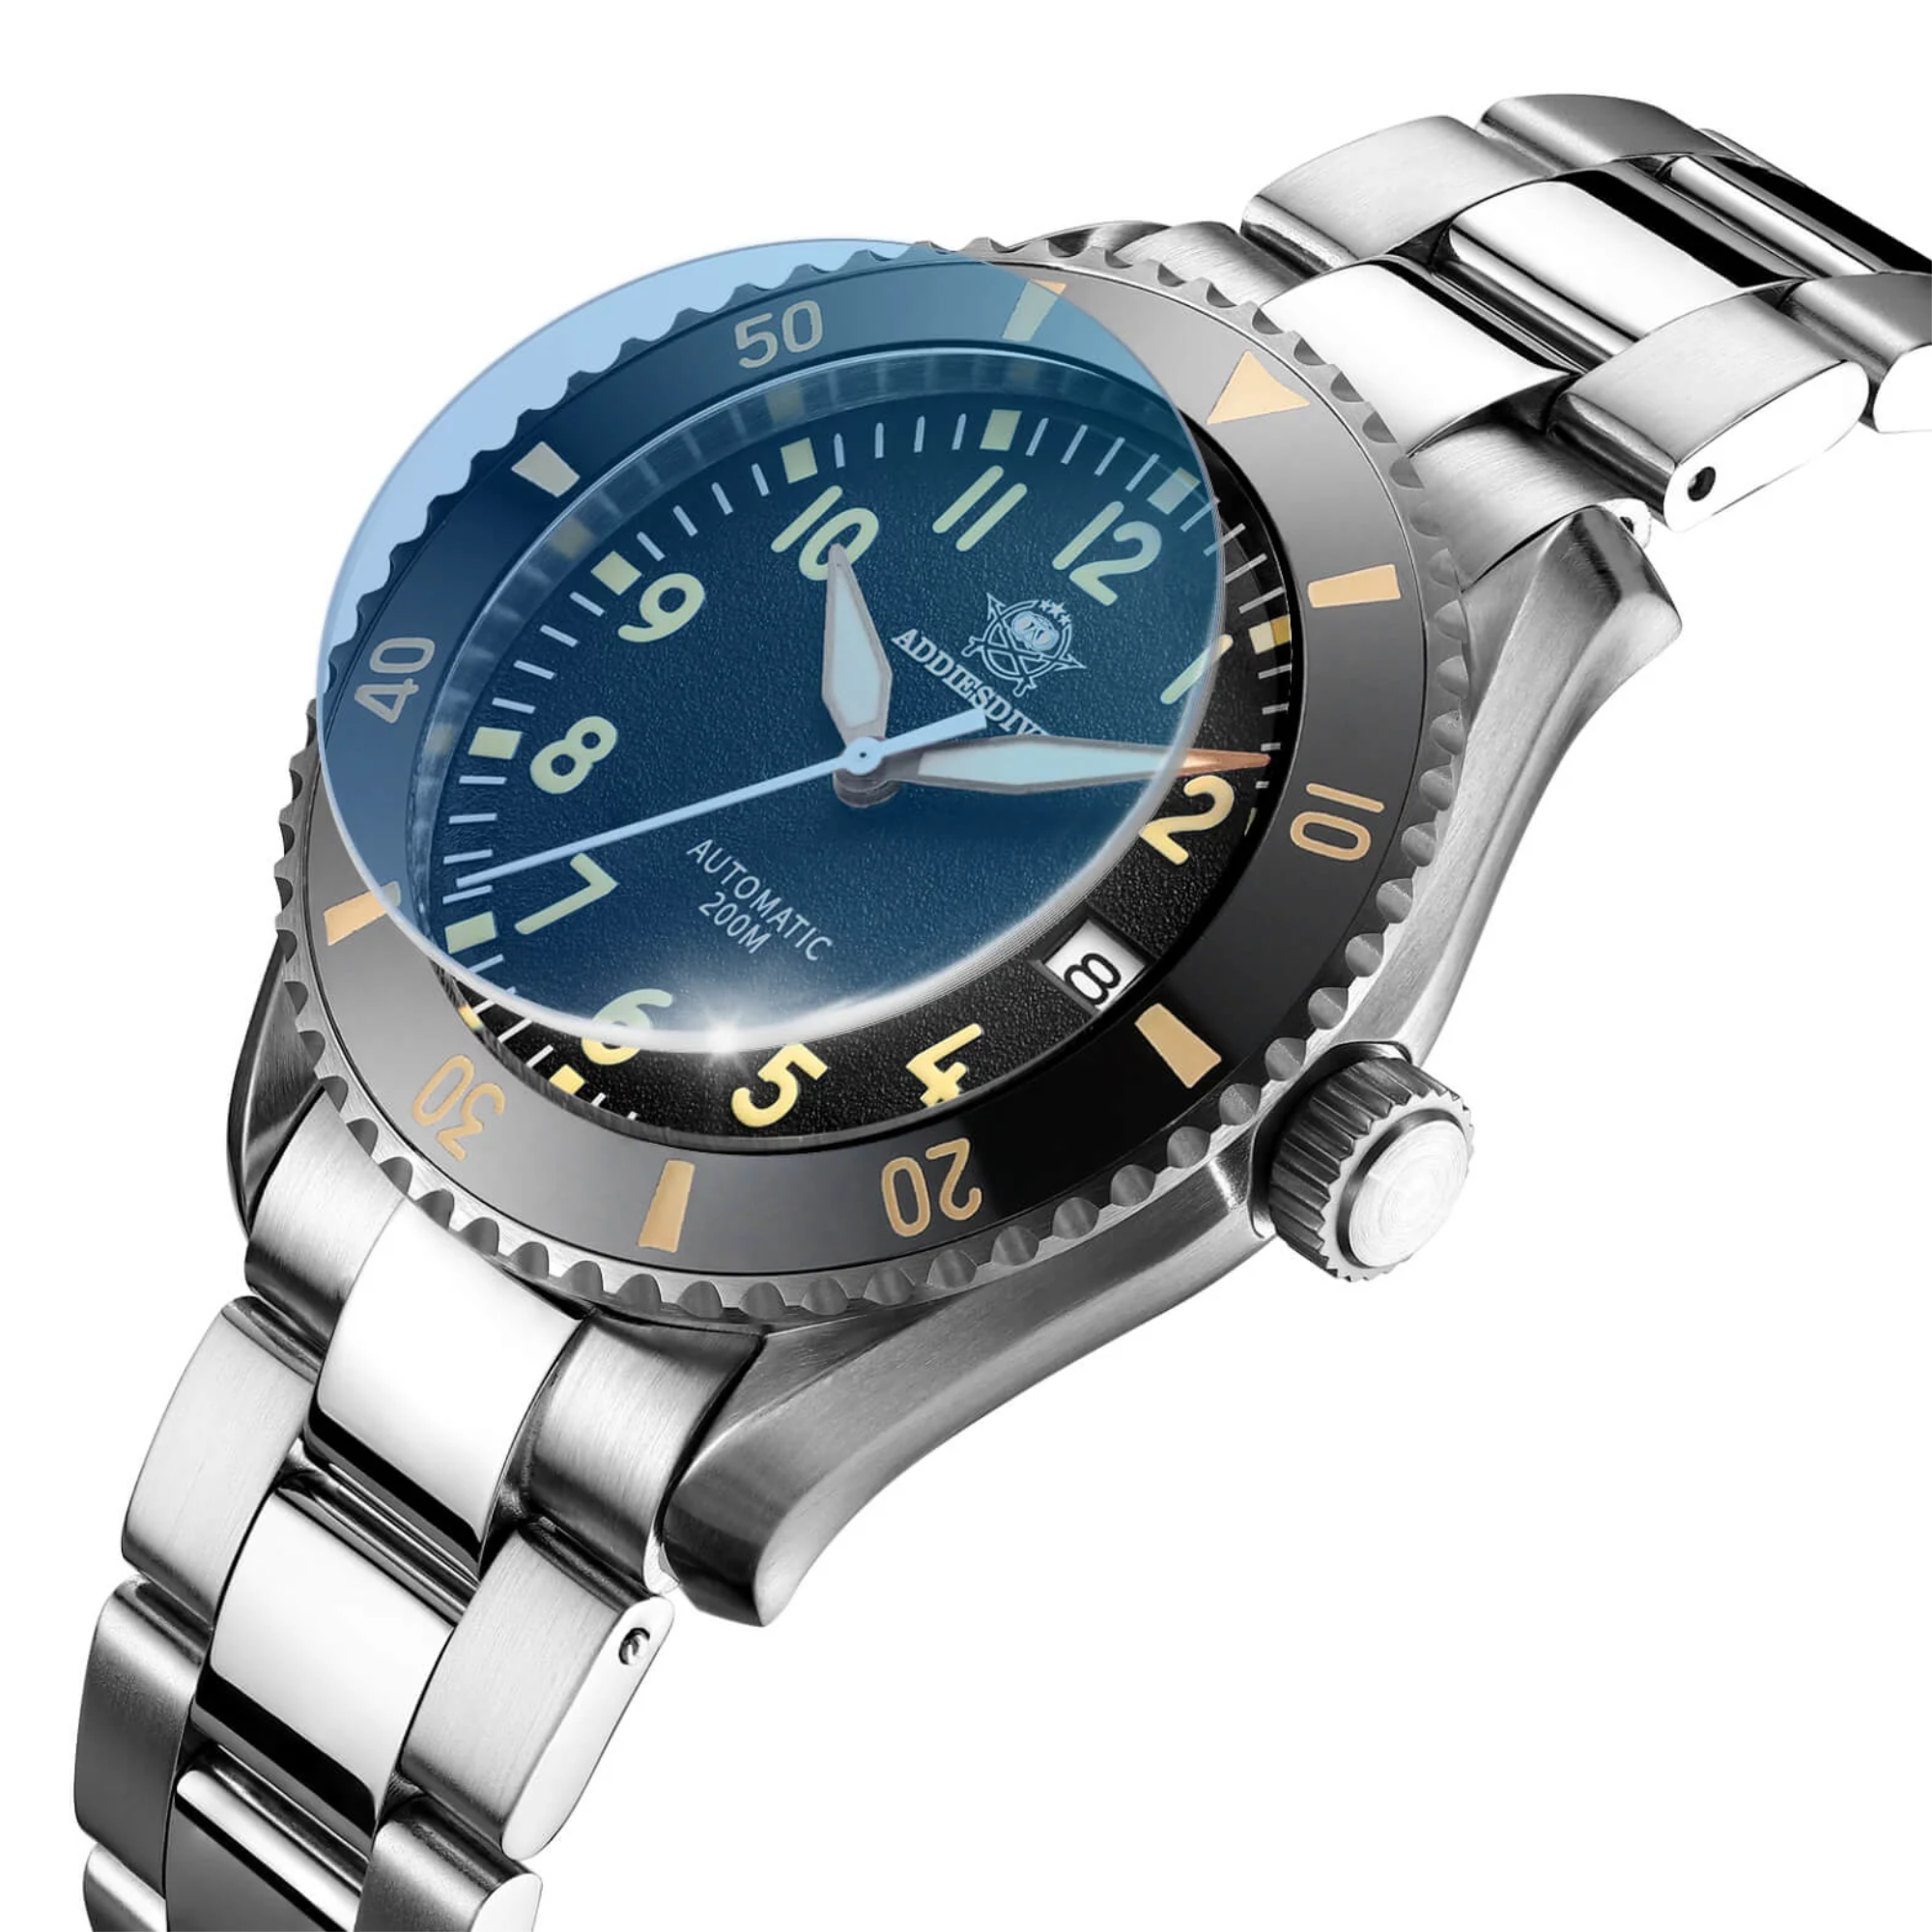 ADDIESDIVE® 2-in-1 Automatic Pilot Watch Diver 200M( MY-H9)